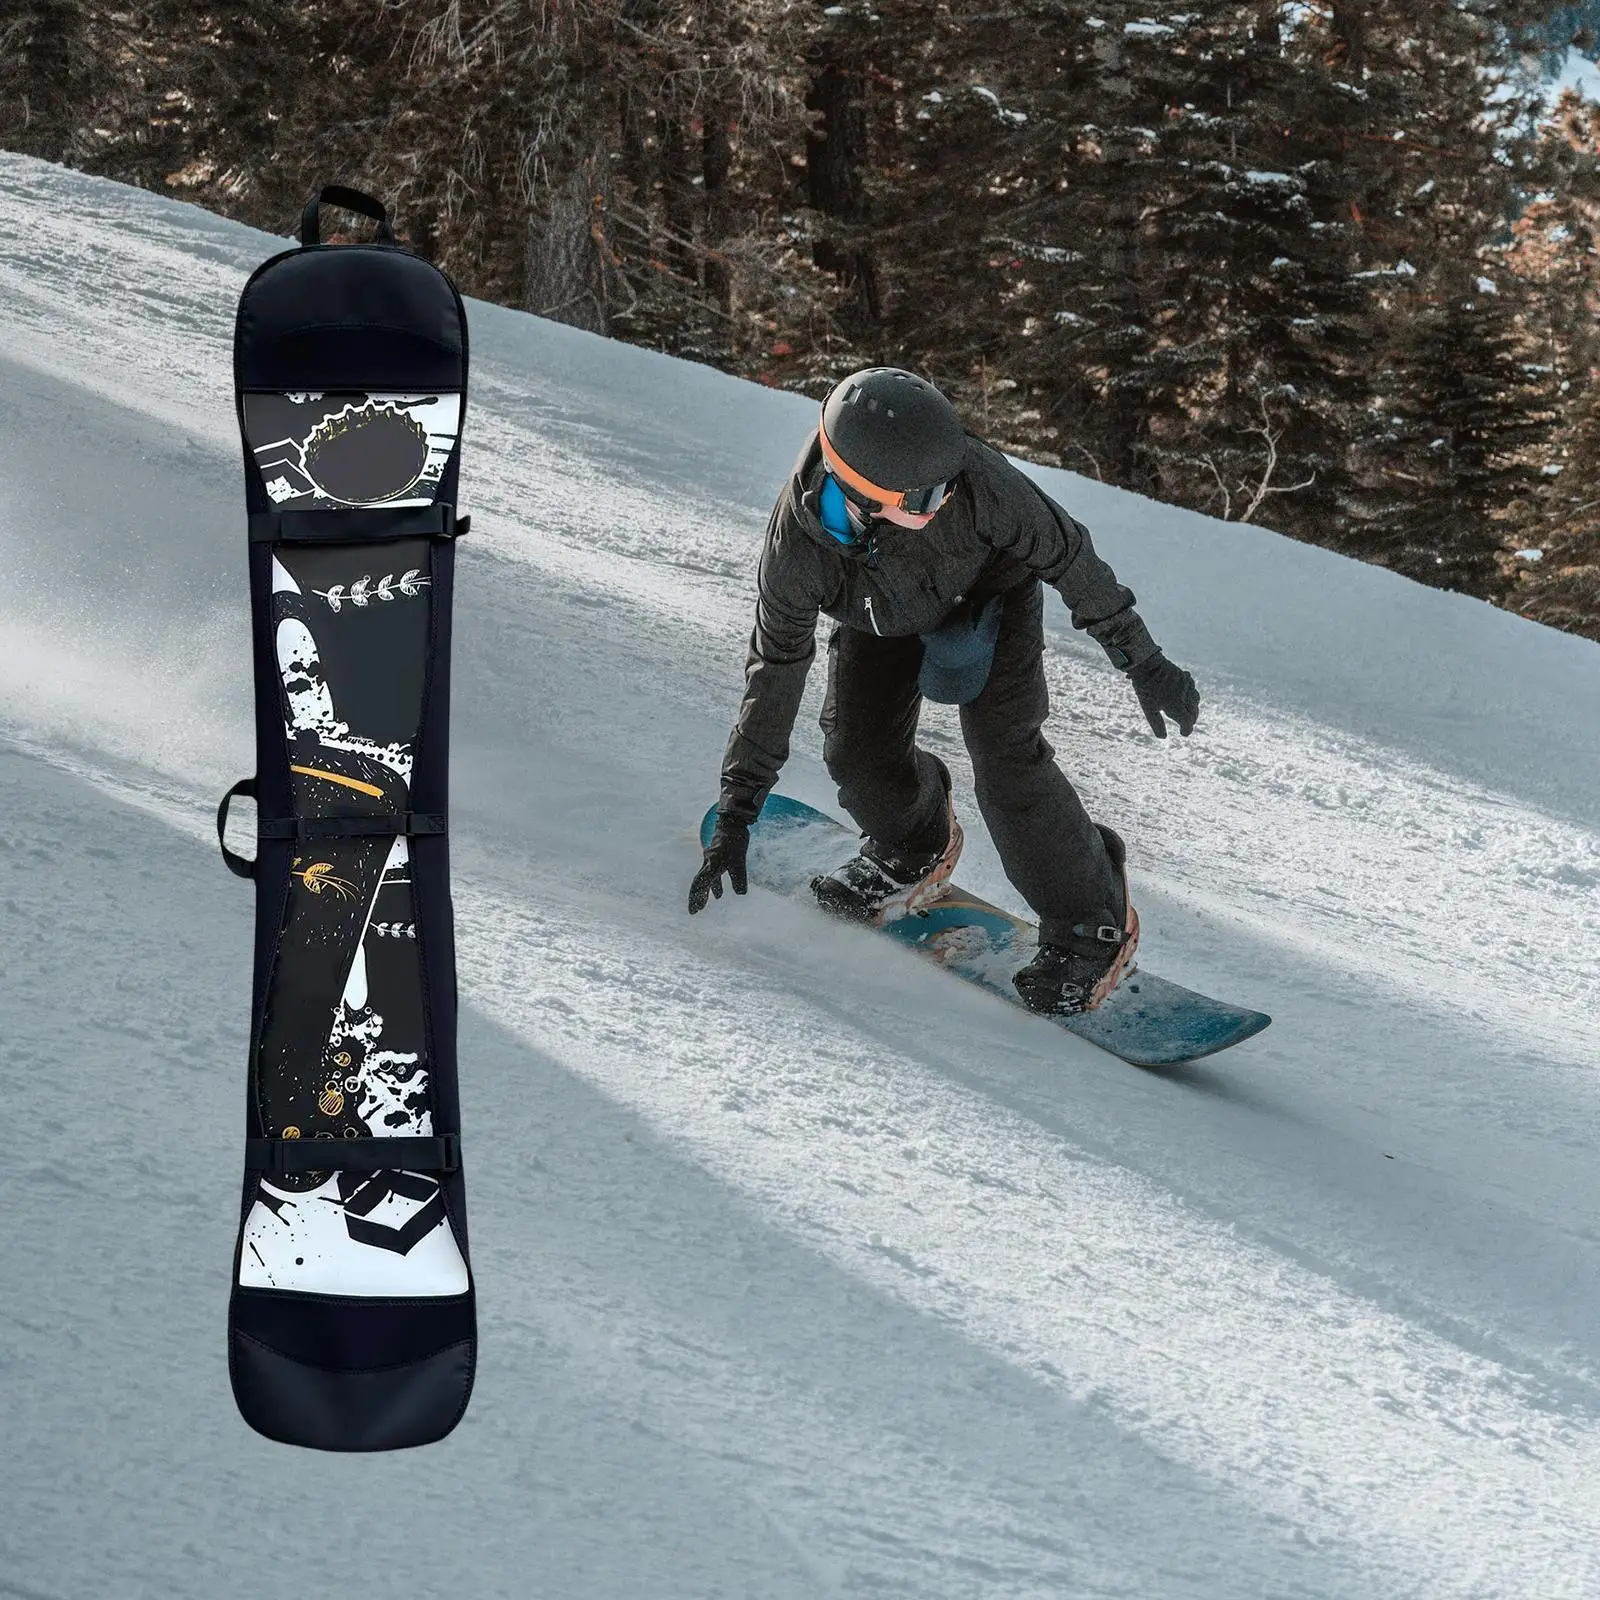 163cm to 174cm Snowboard Bag Adjustable Belt Shoulder Straps Protector Supplies Carrying Bag Ski Cover for Winter Travel Luggage